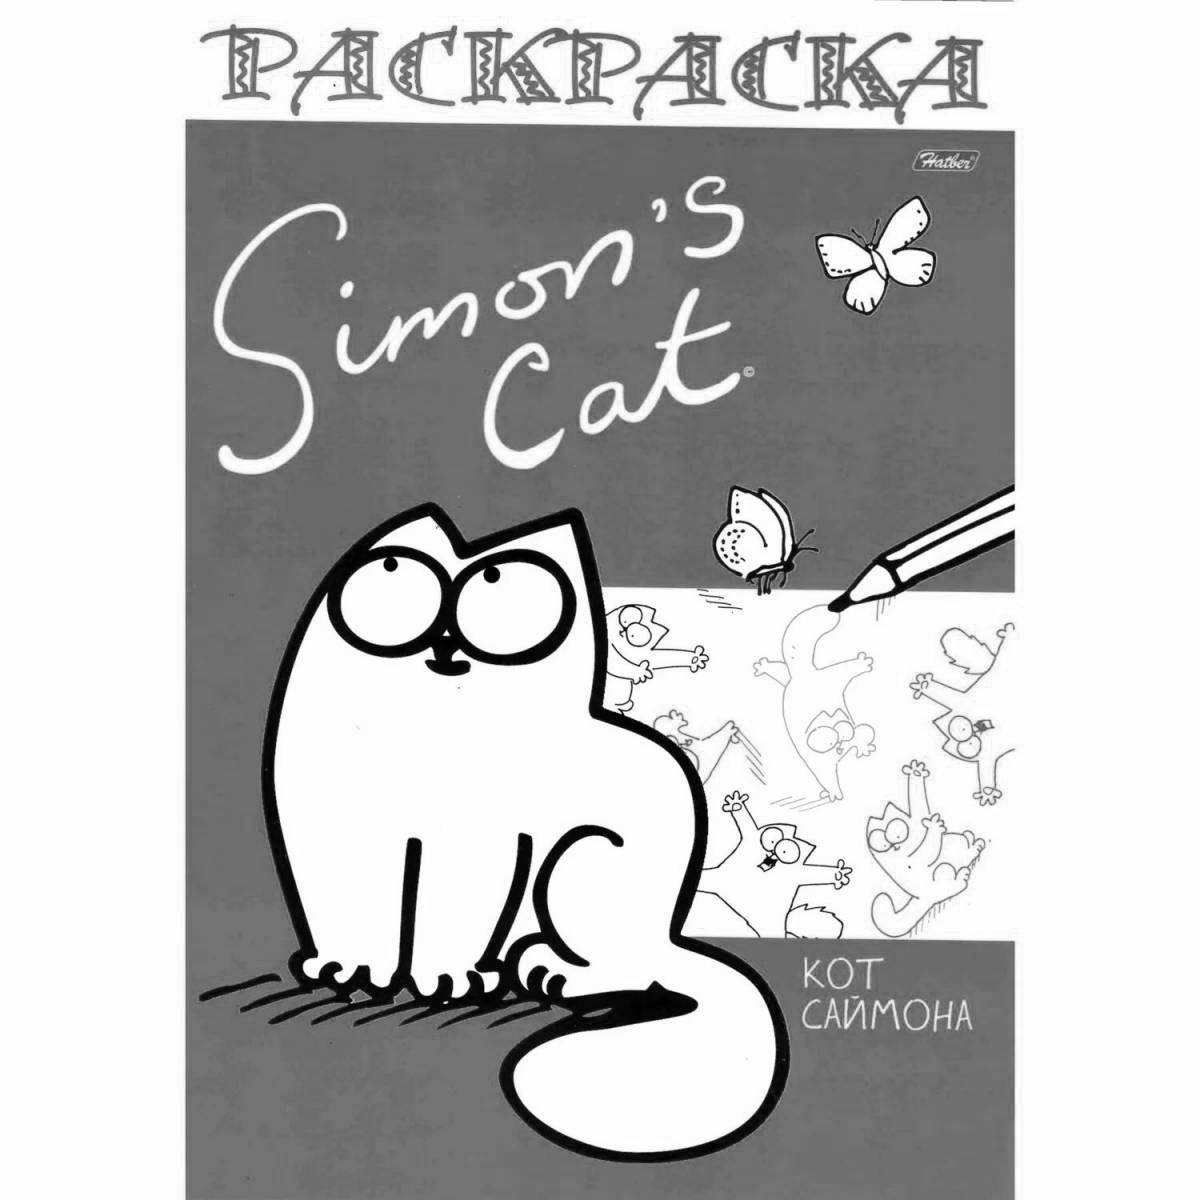 Simon's charming coloring book